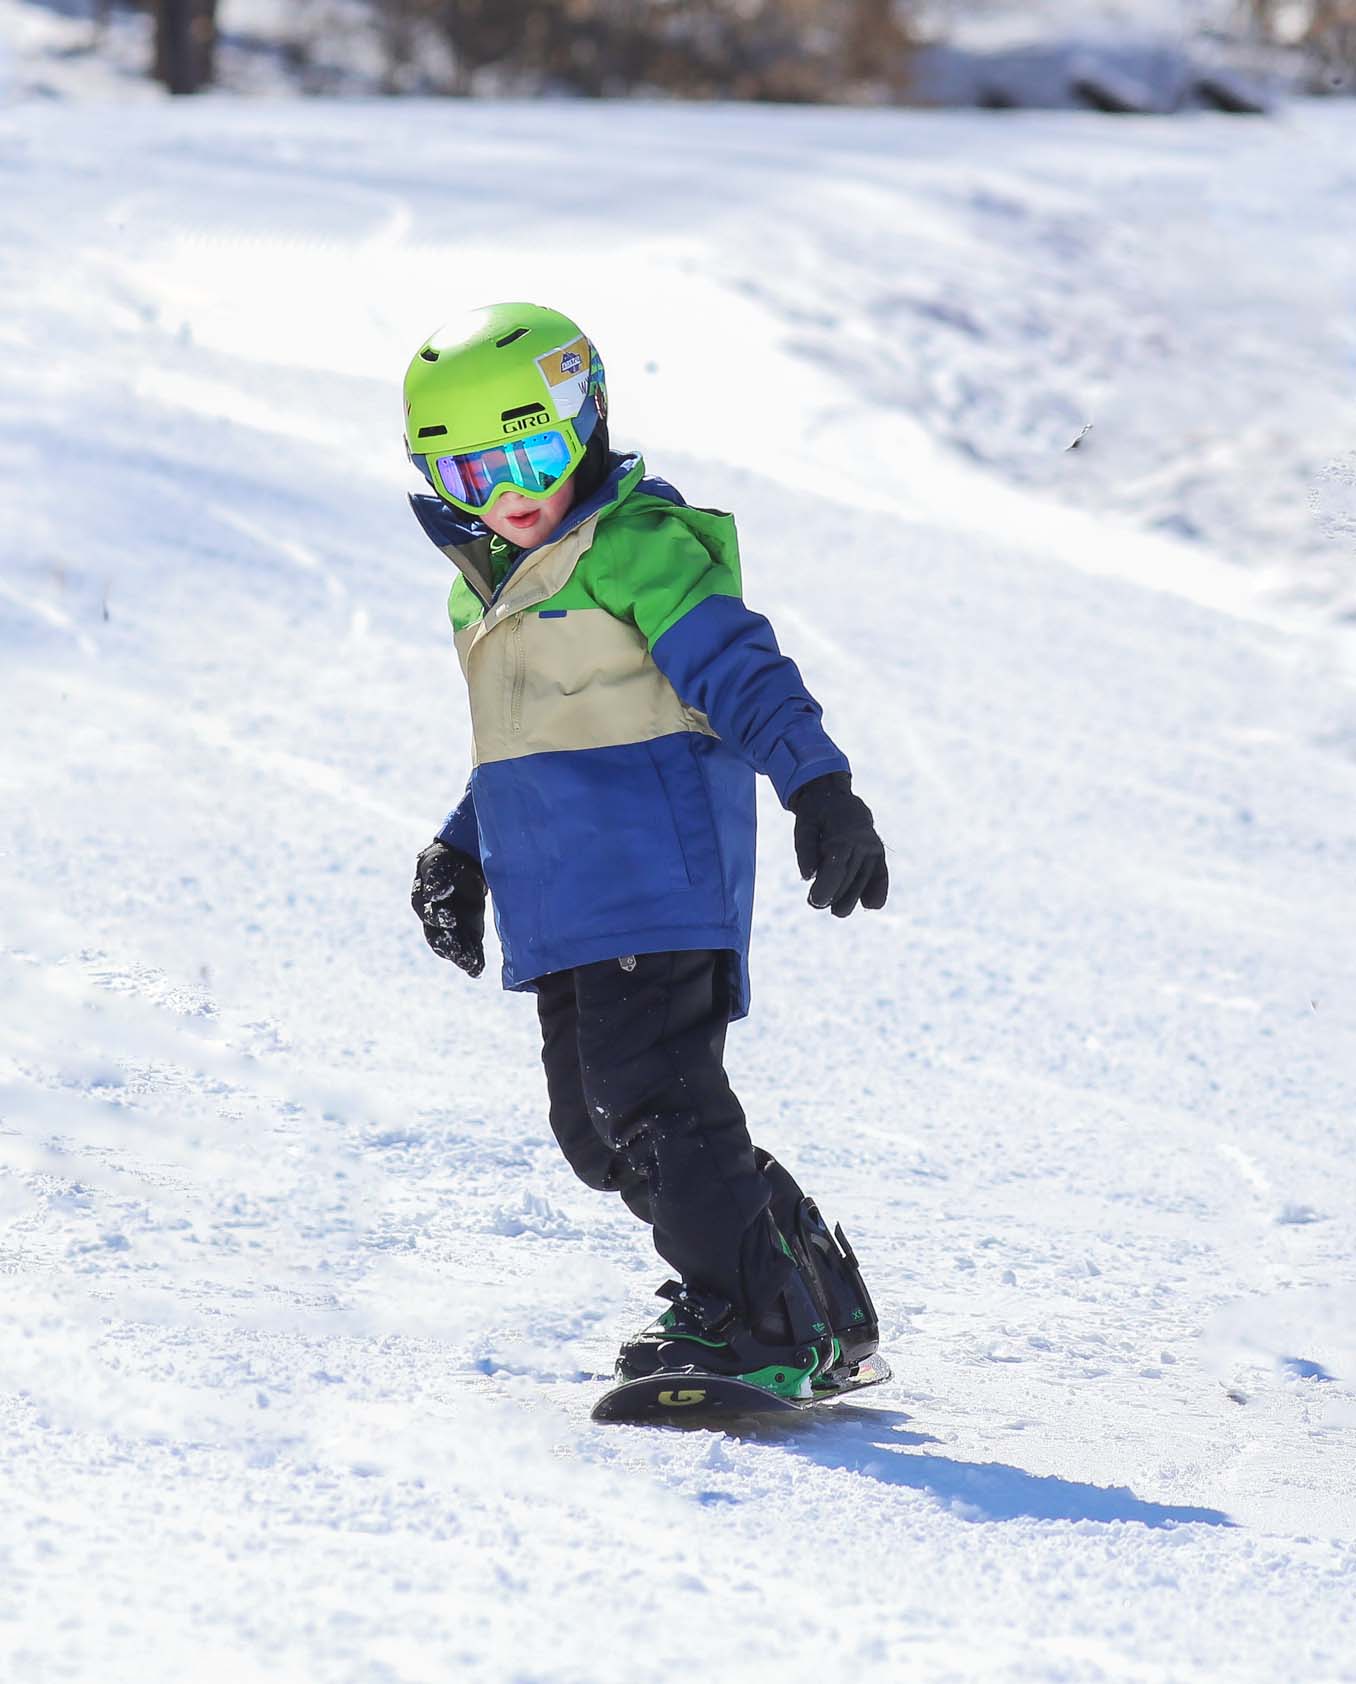 Child snowboarding down mountain.